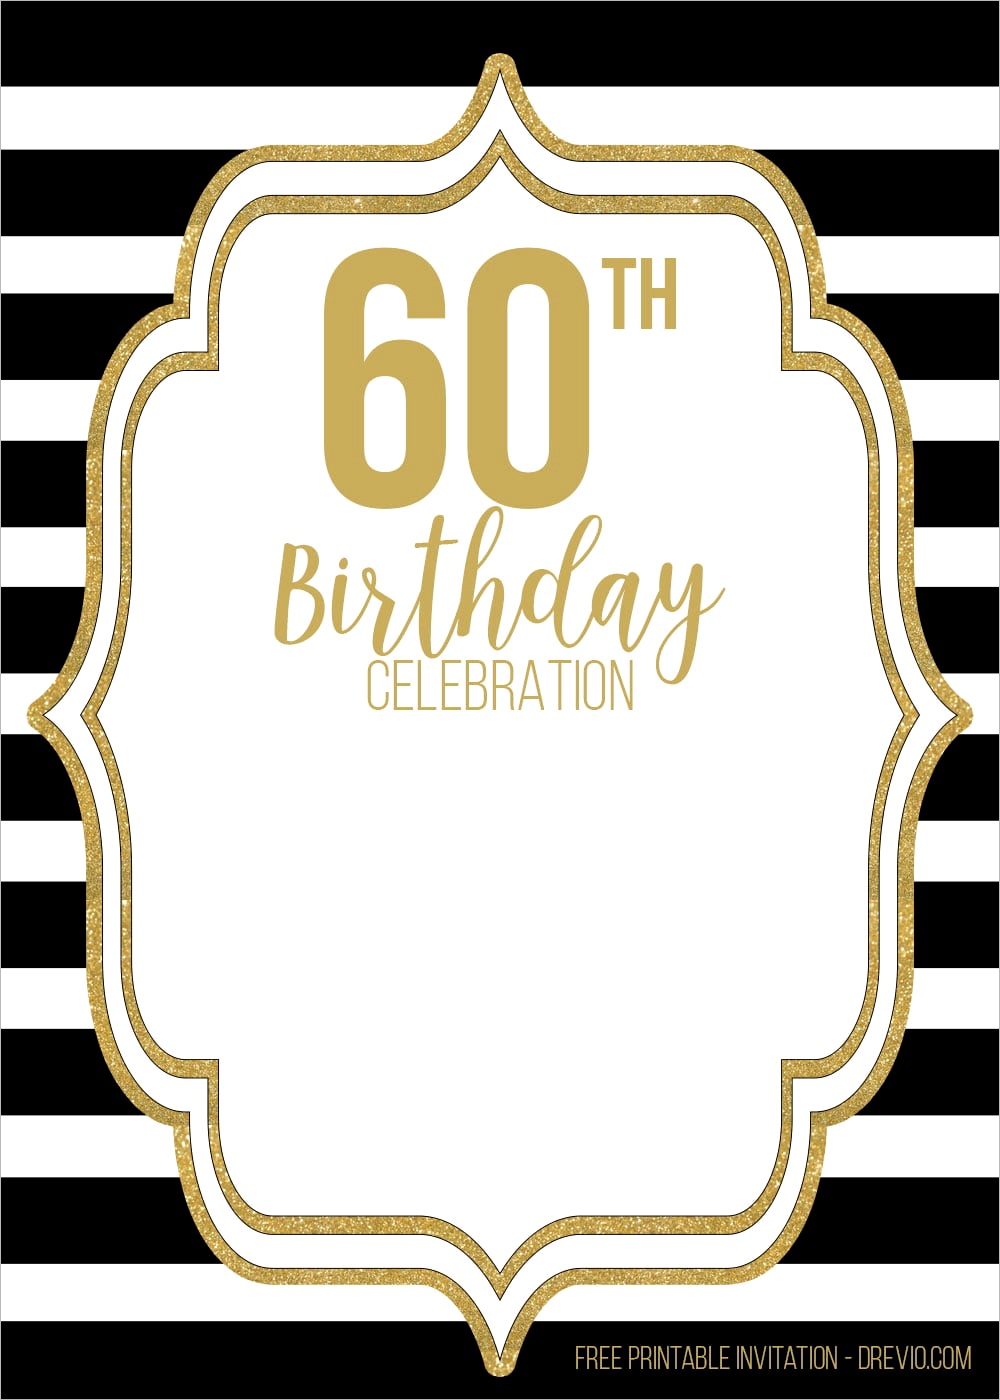 Editable Invite Sixty th Birthday Invitation Black andp